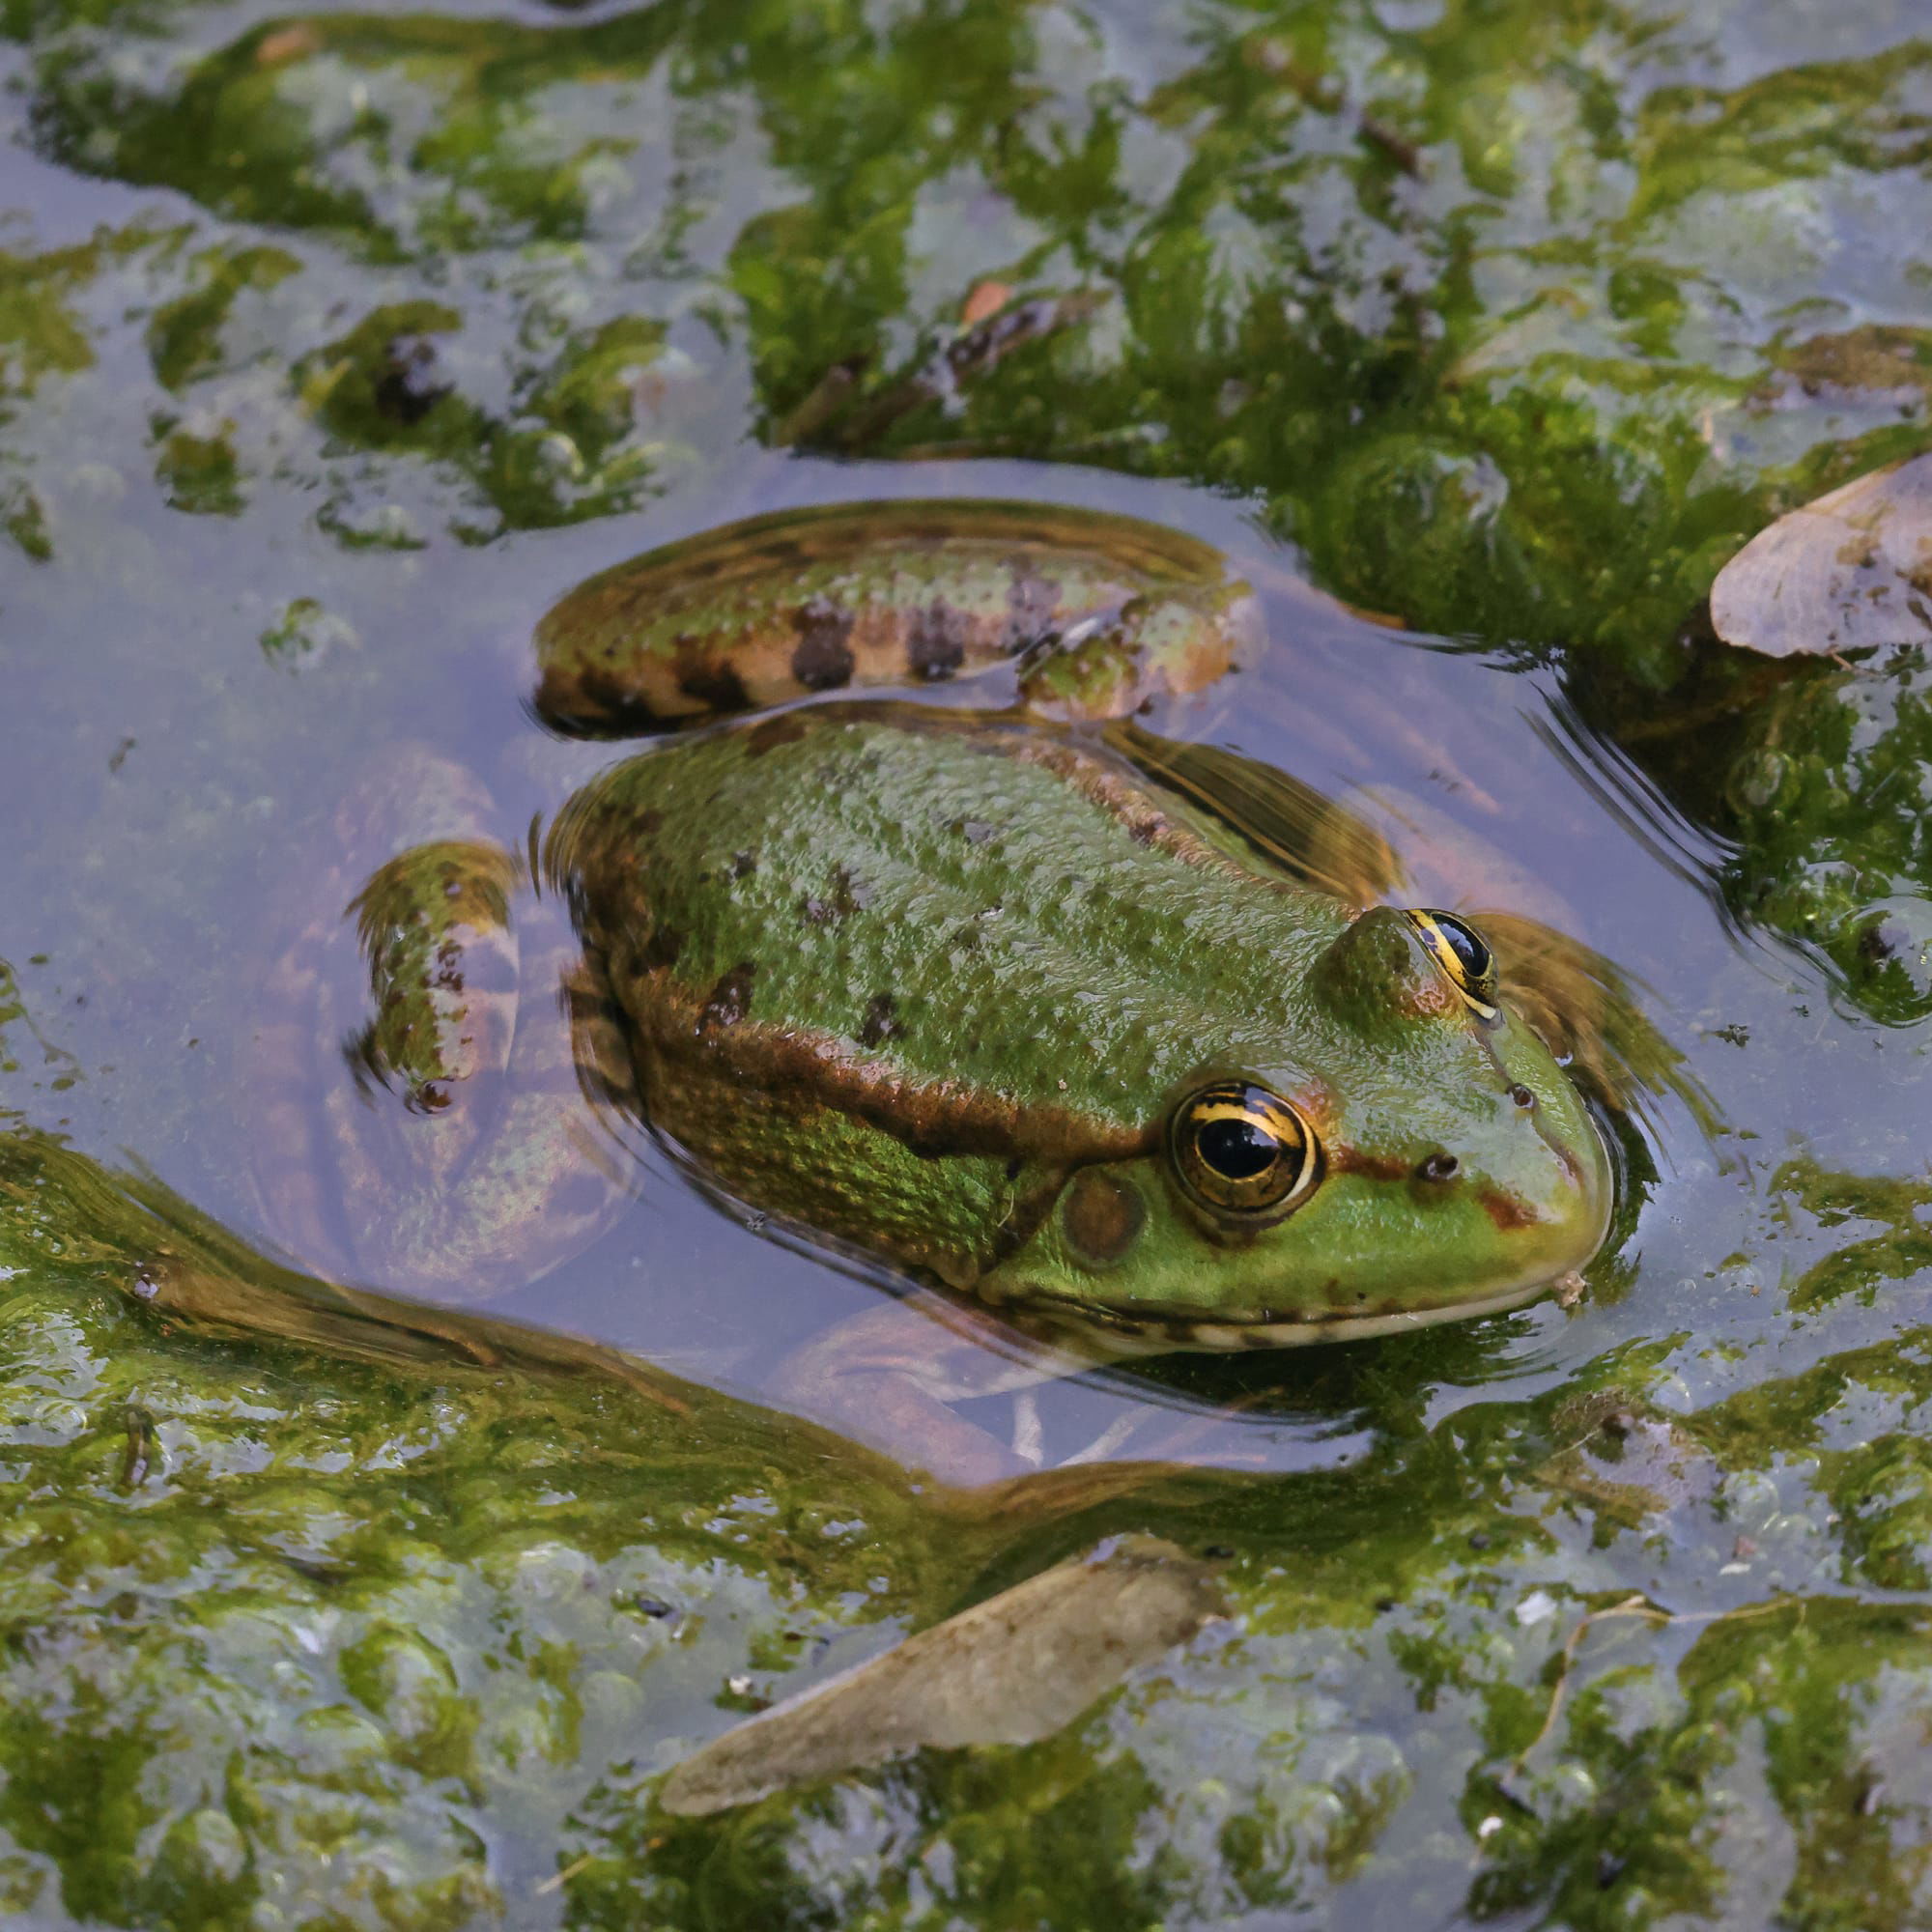 European Green Frog